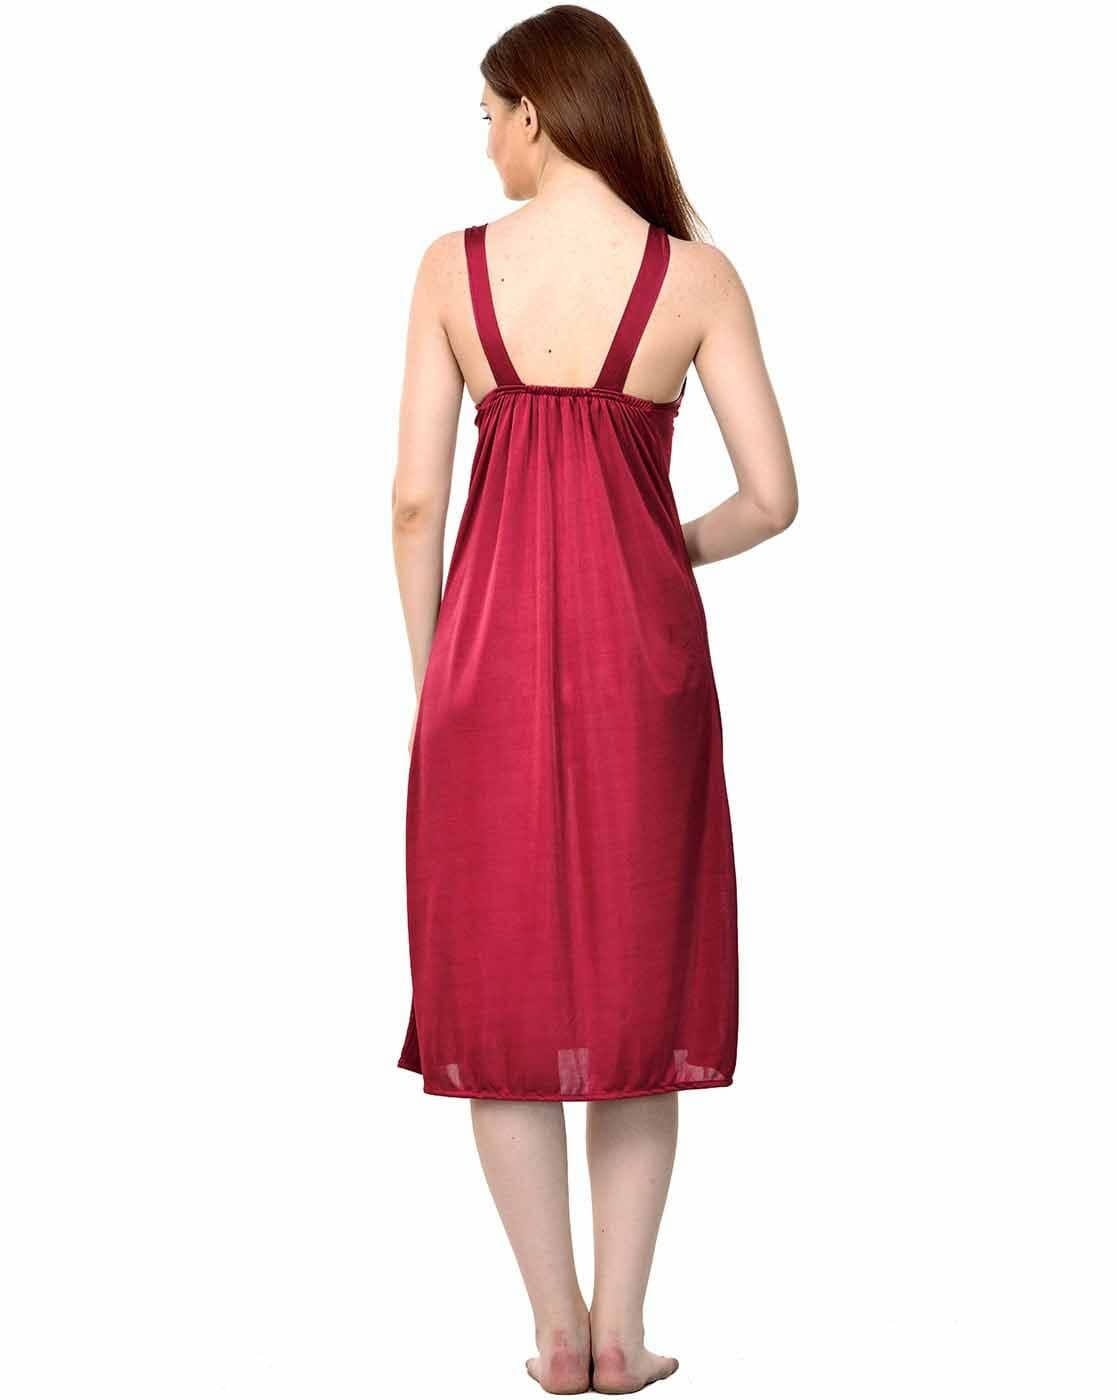 Buy Red Nightshirts&Nighties for Women by PHALIN Online